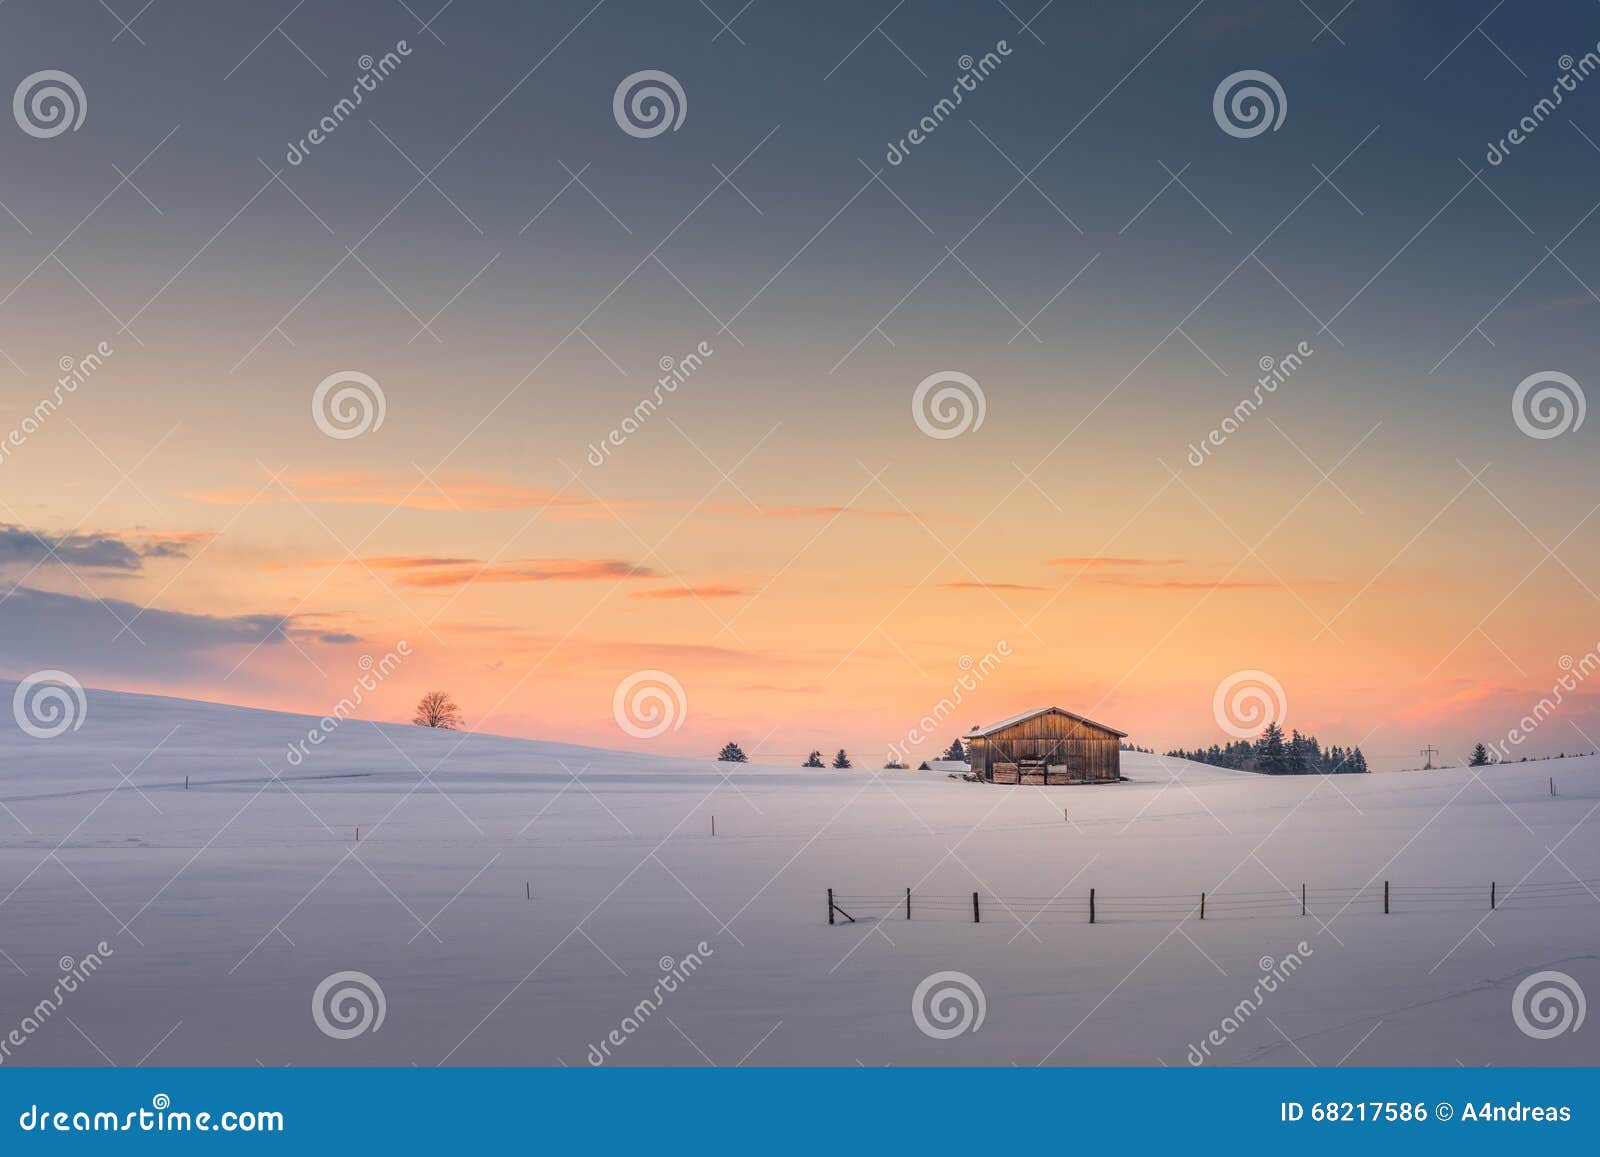 single hut at afterglow sunset sky